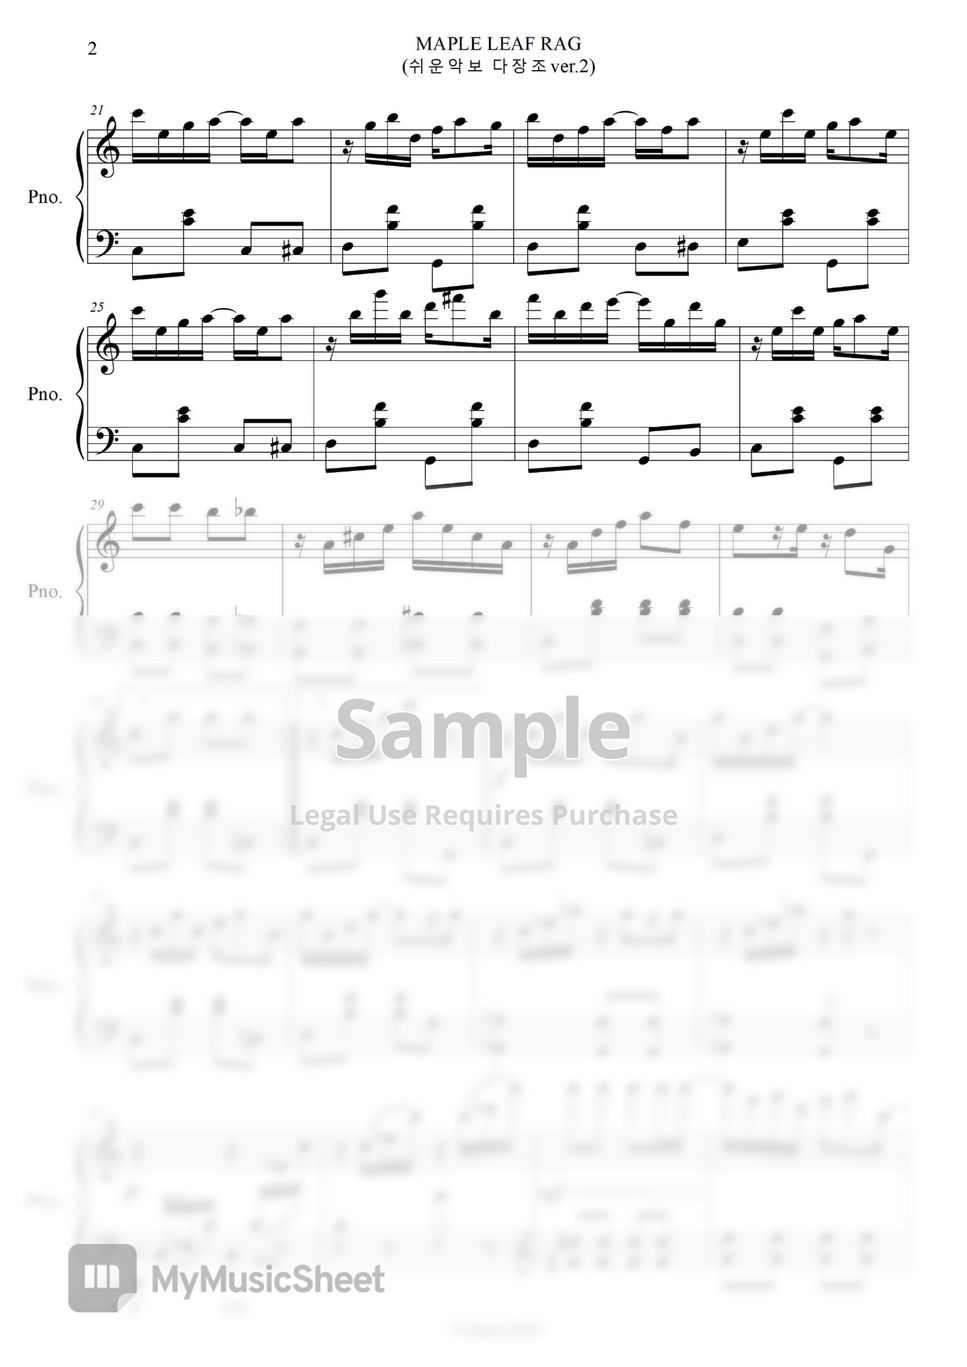 Scott Joplin - MAPLE LEAF RAG (쉬운악보 다장조 ver.2) by classic2020